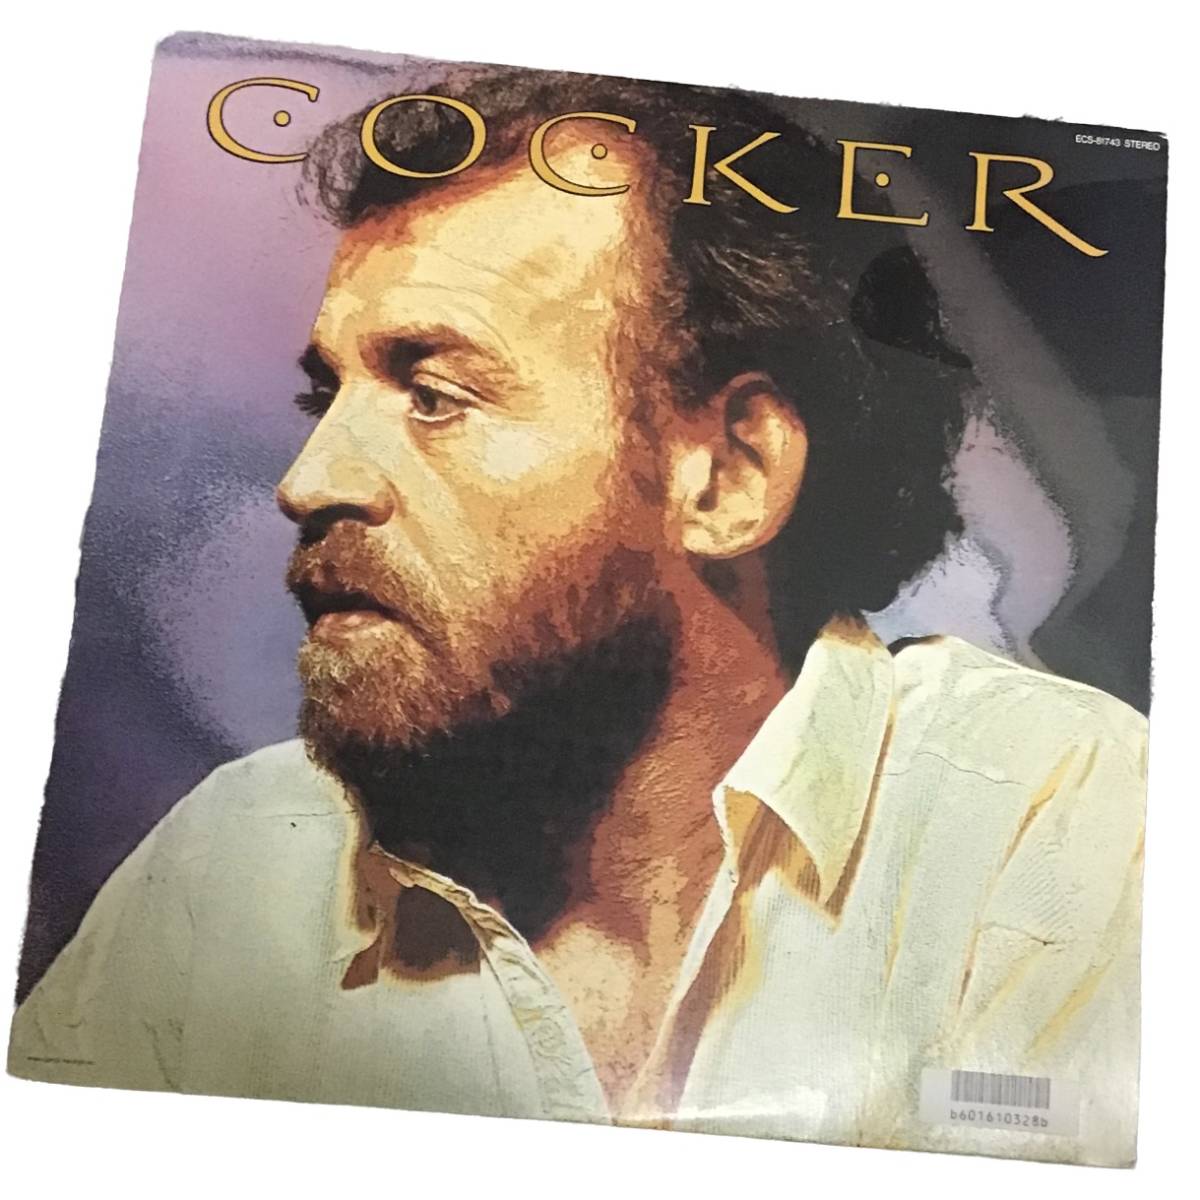 [USED записано в Японии Vinyl LP]Joe Cocker Cocker *Cocker 1986 Capitol Records ECS81743 Joe * Cocker запись 